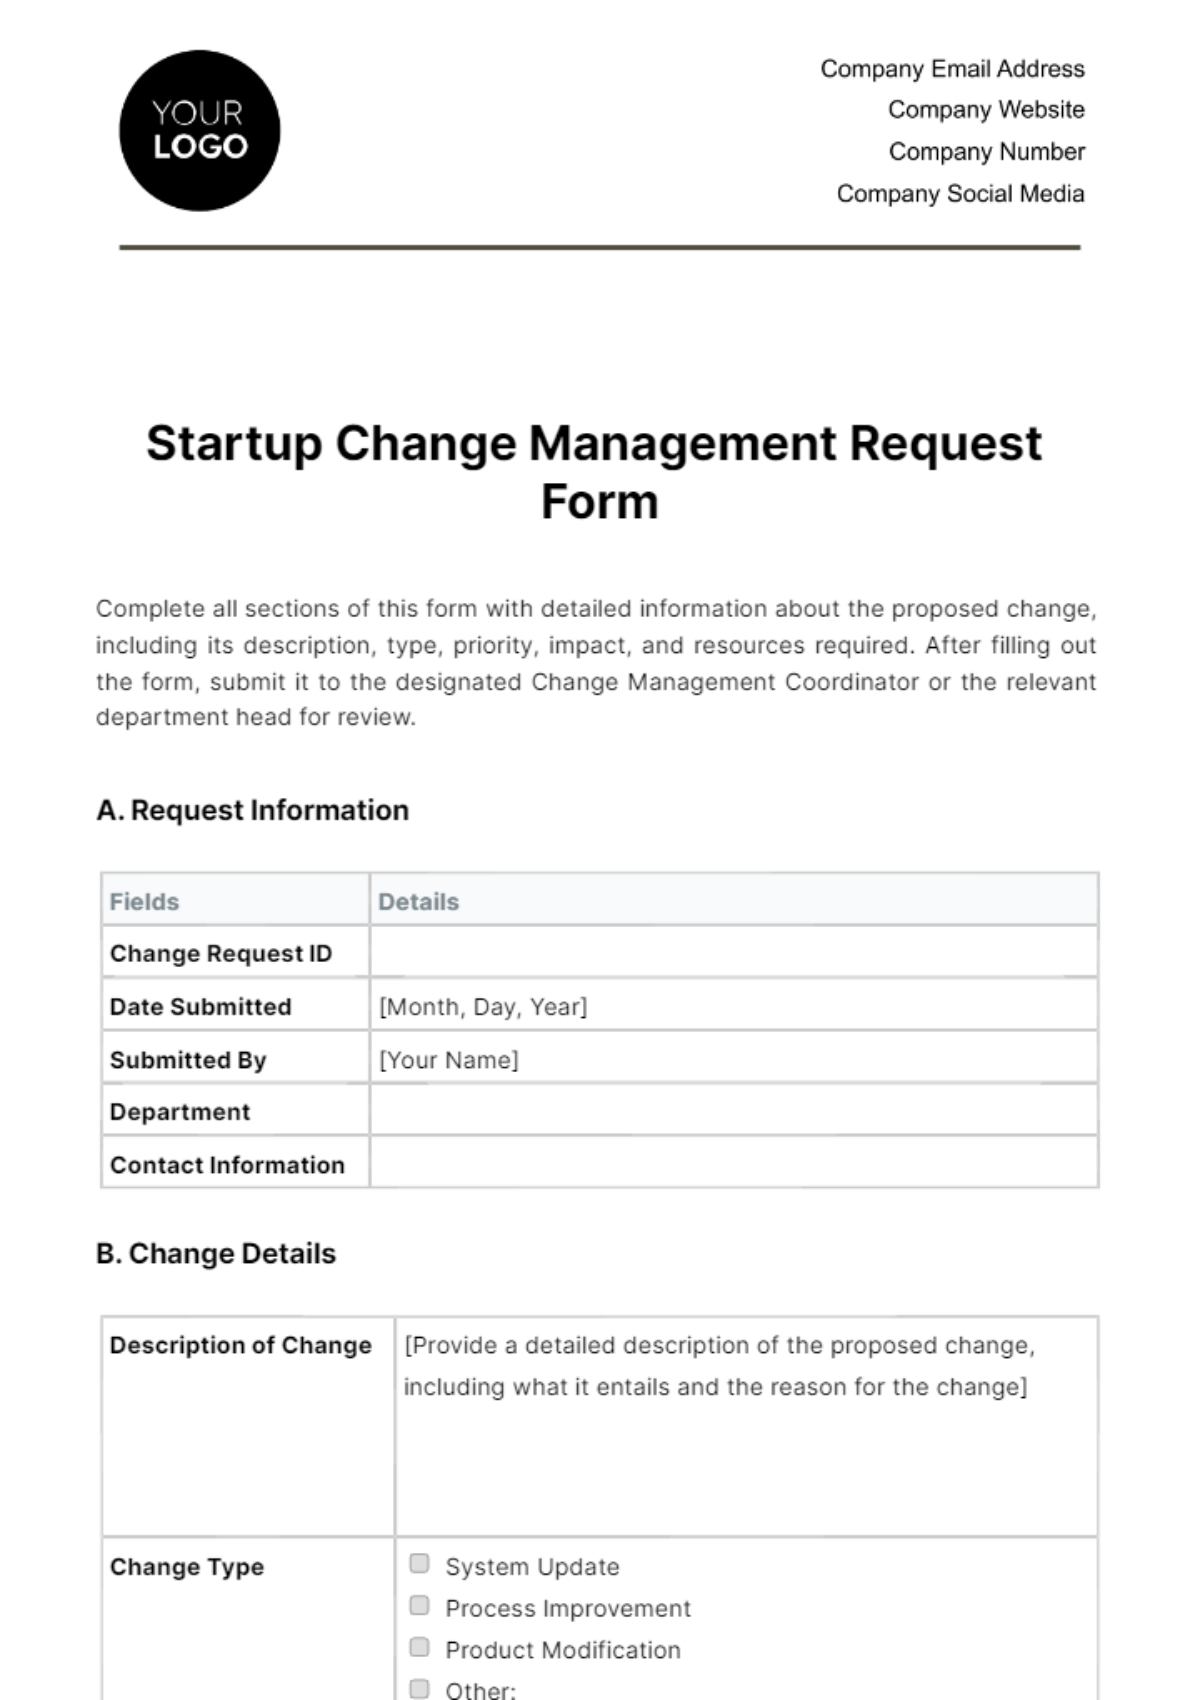 Startup Change Management Request Form Template